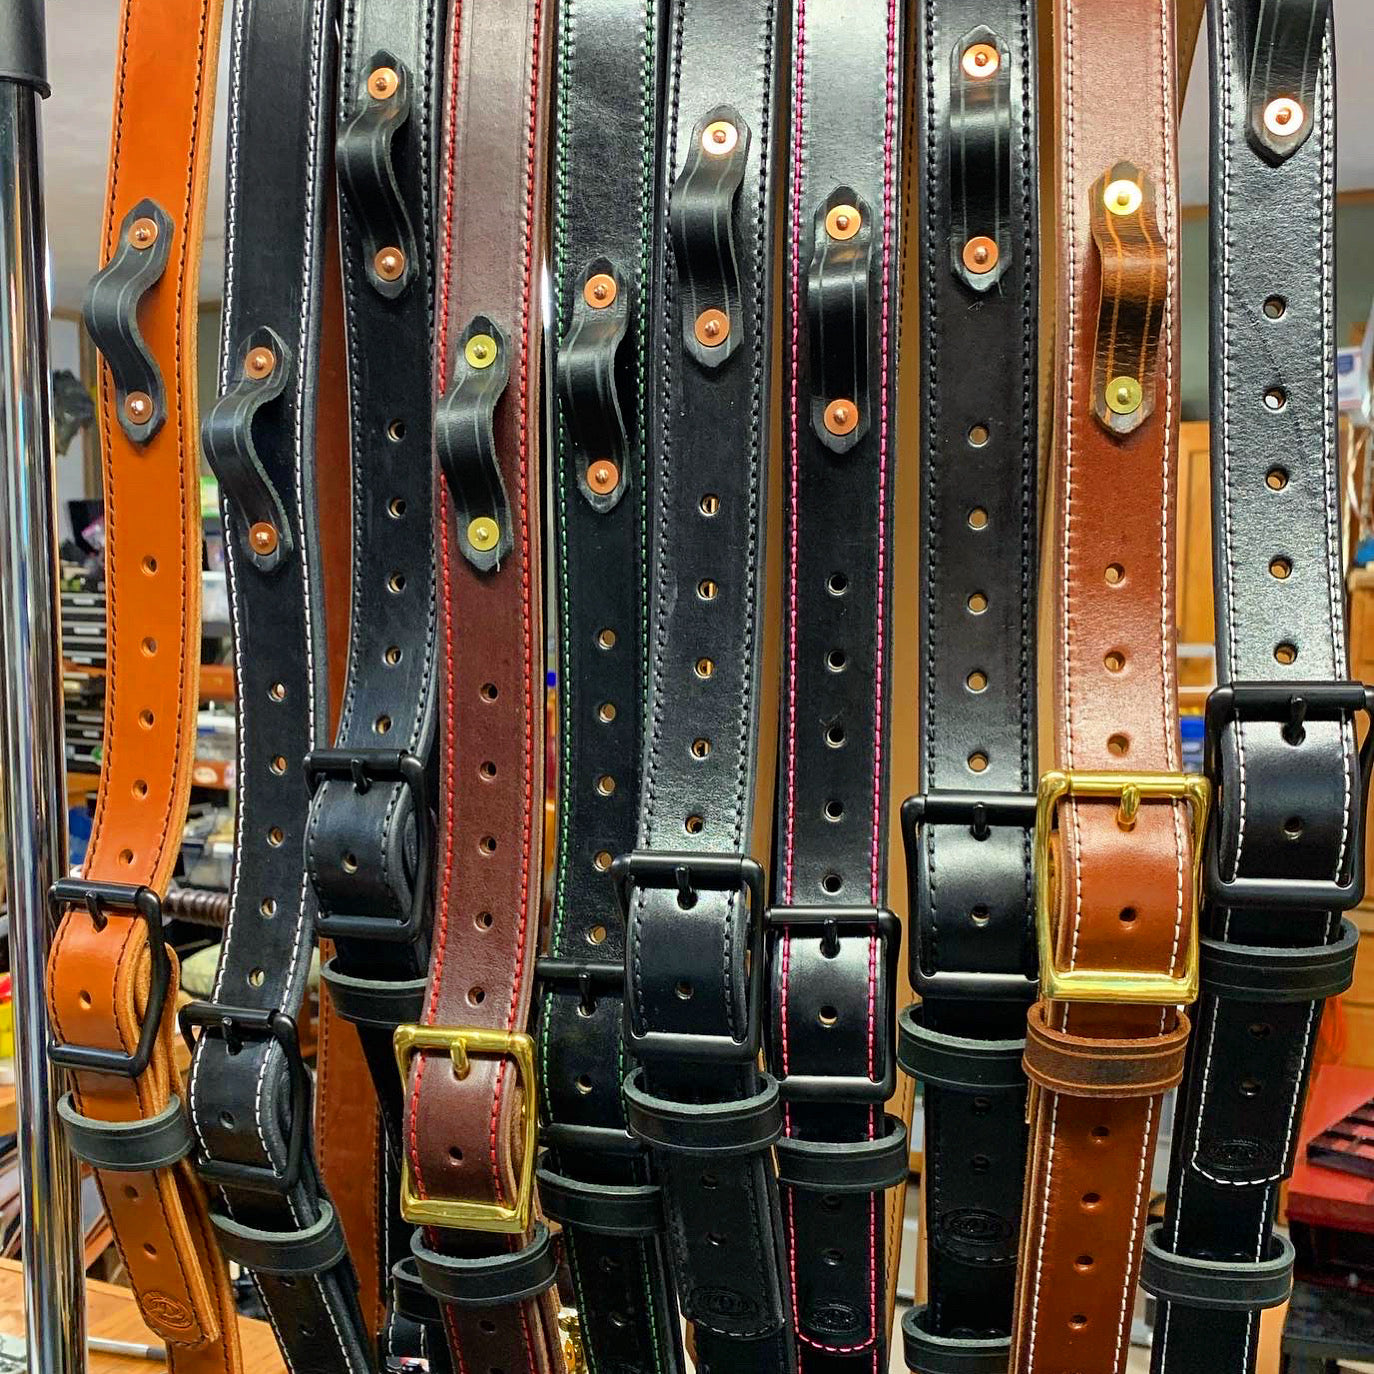 Homyl Leather Rivet Decoration Copper Rivets for DIY Leather Craft Belt Repair A, Size: Multi